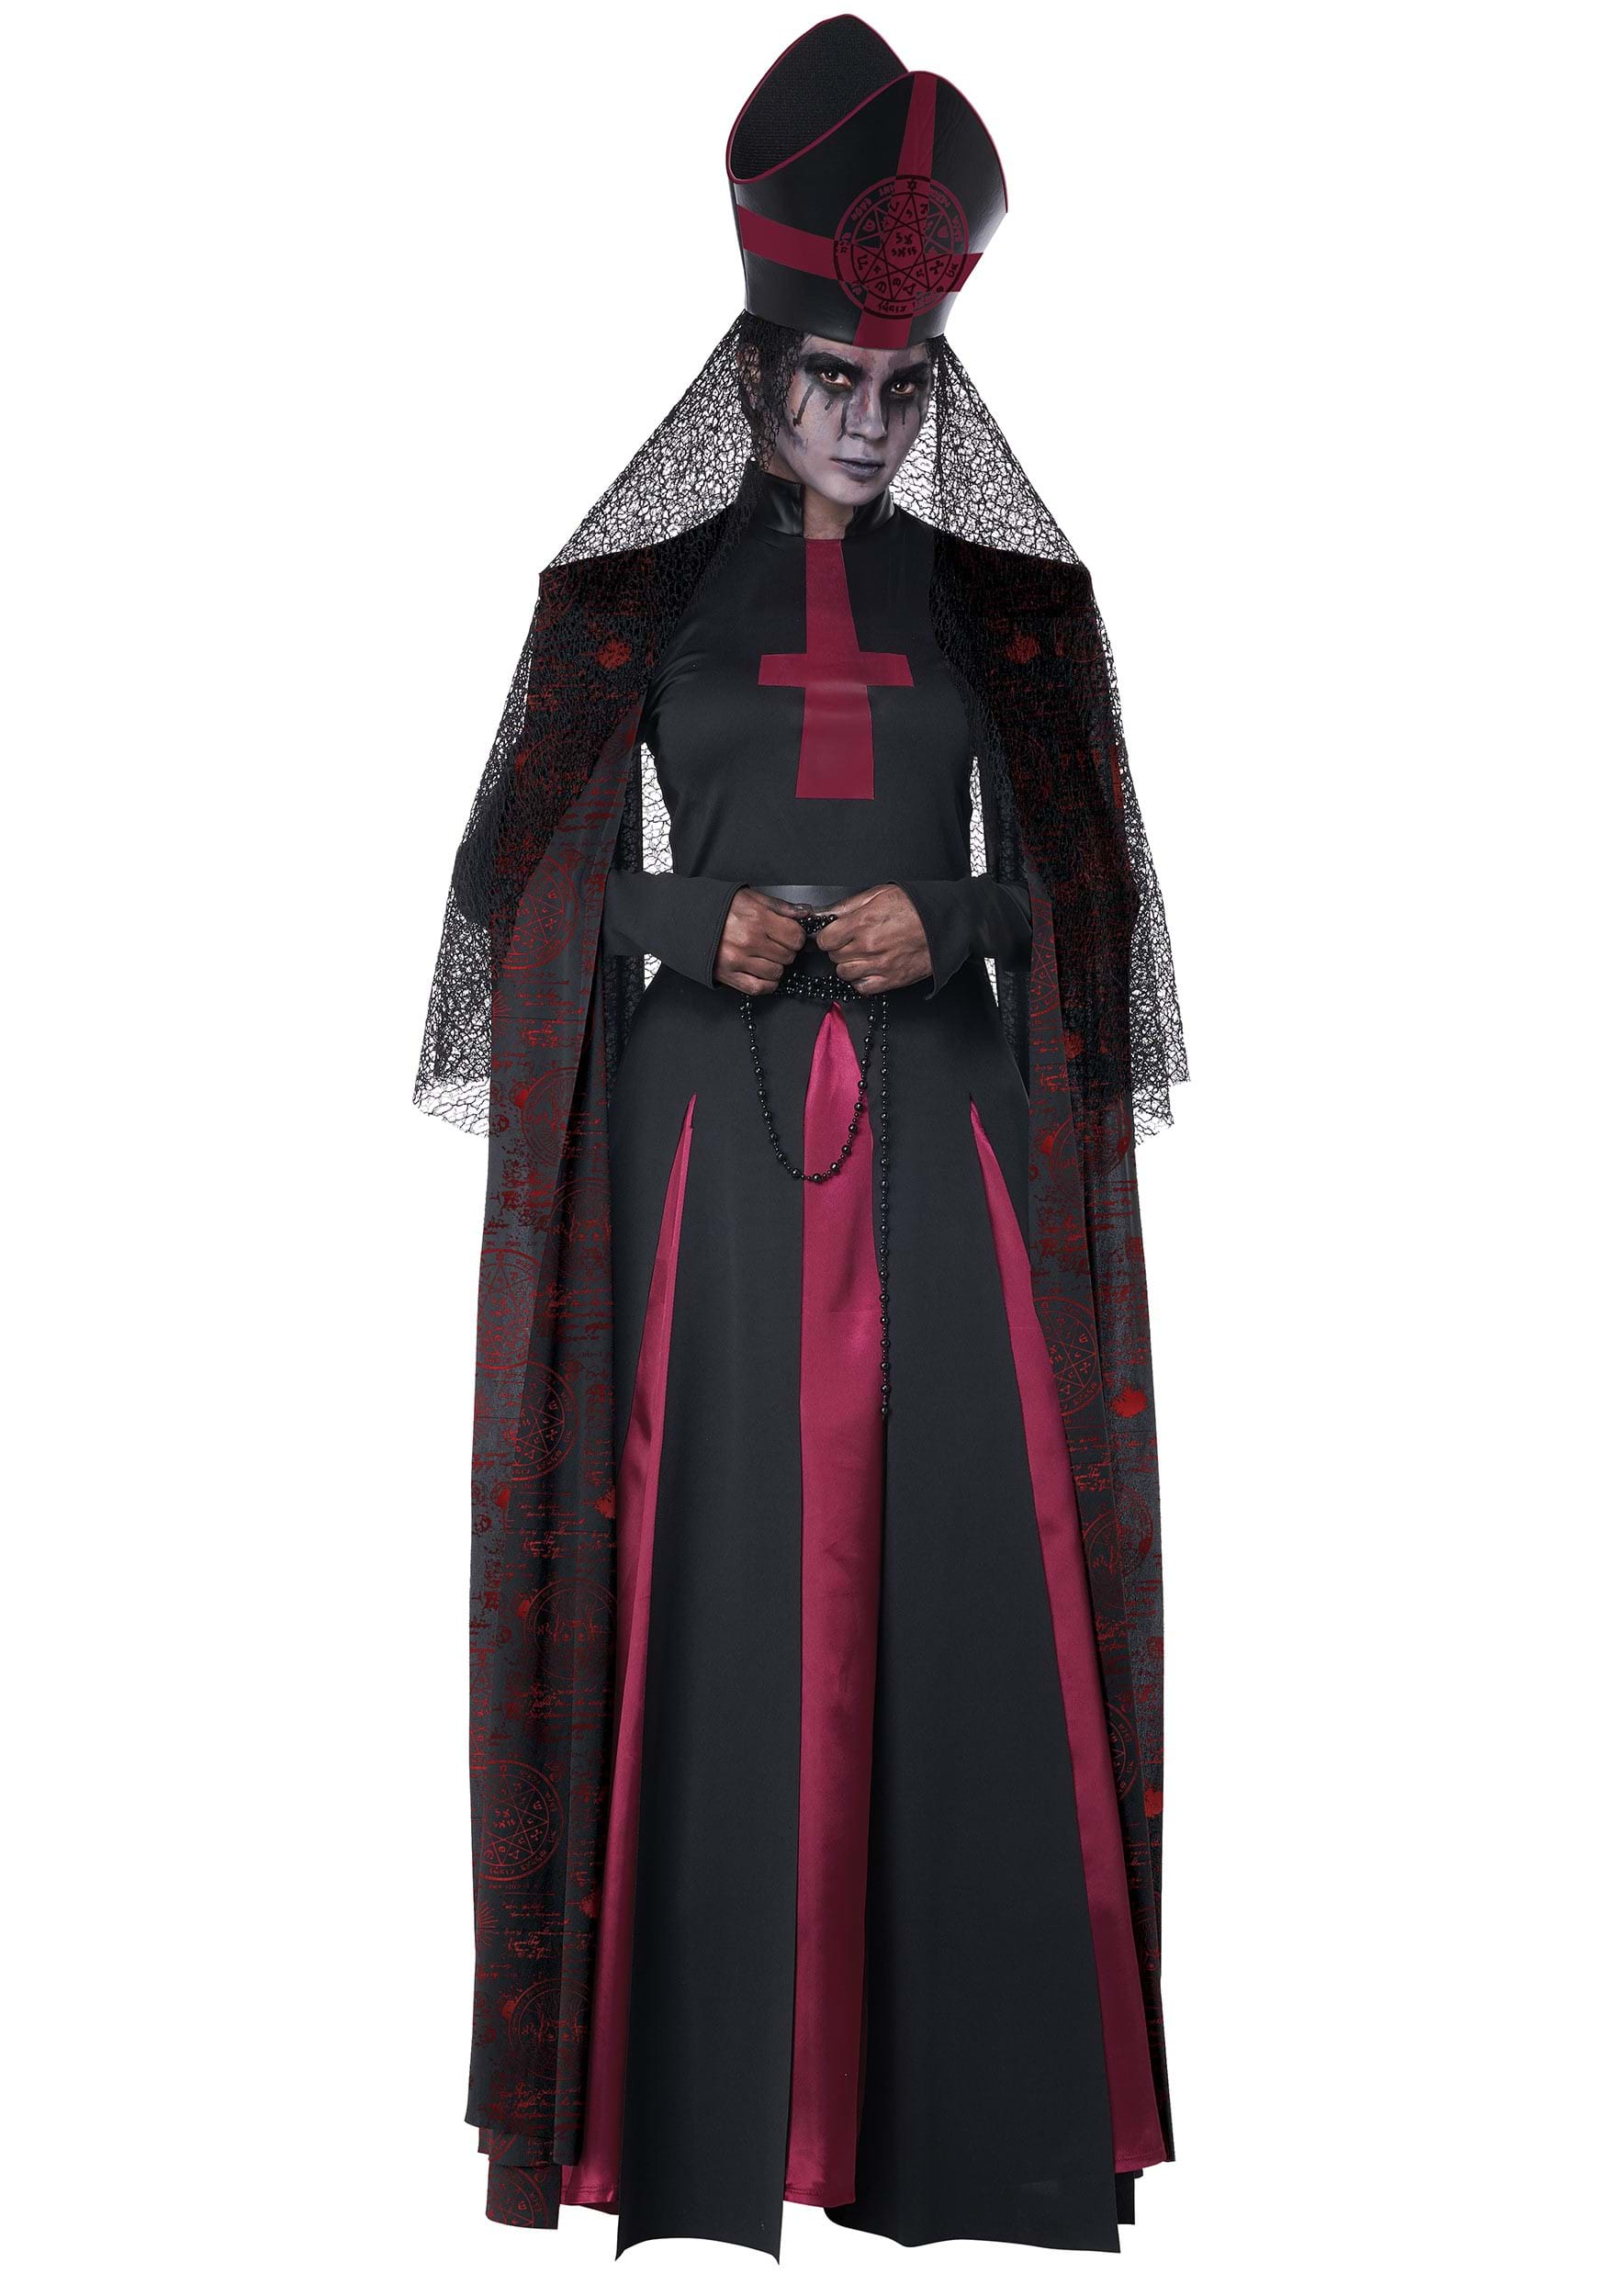 Occult Priestess Women's Costume